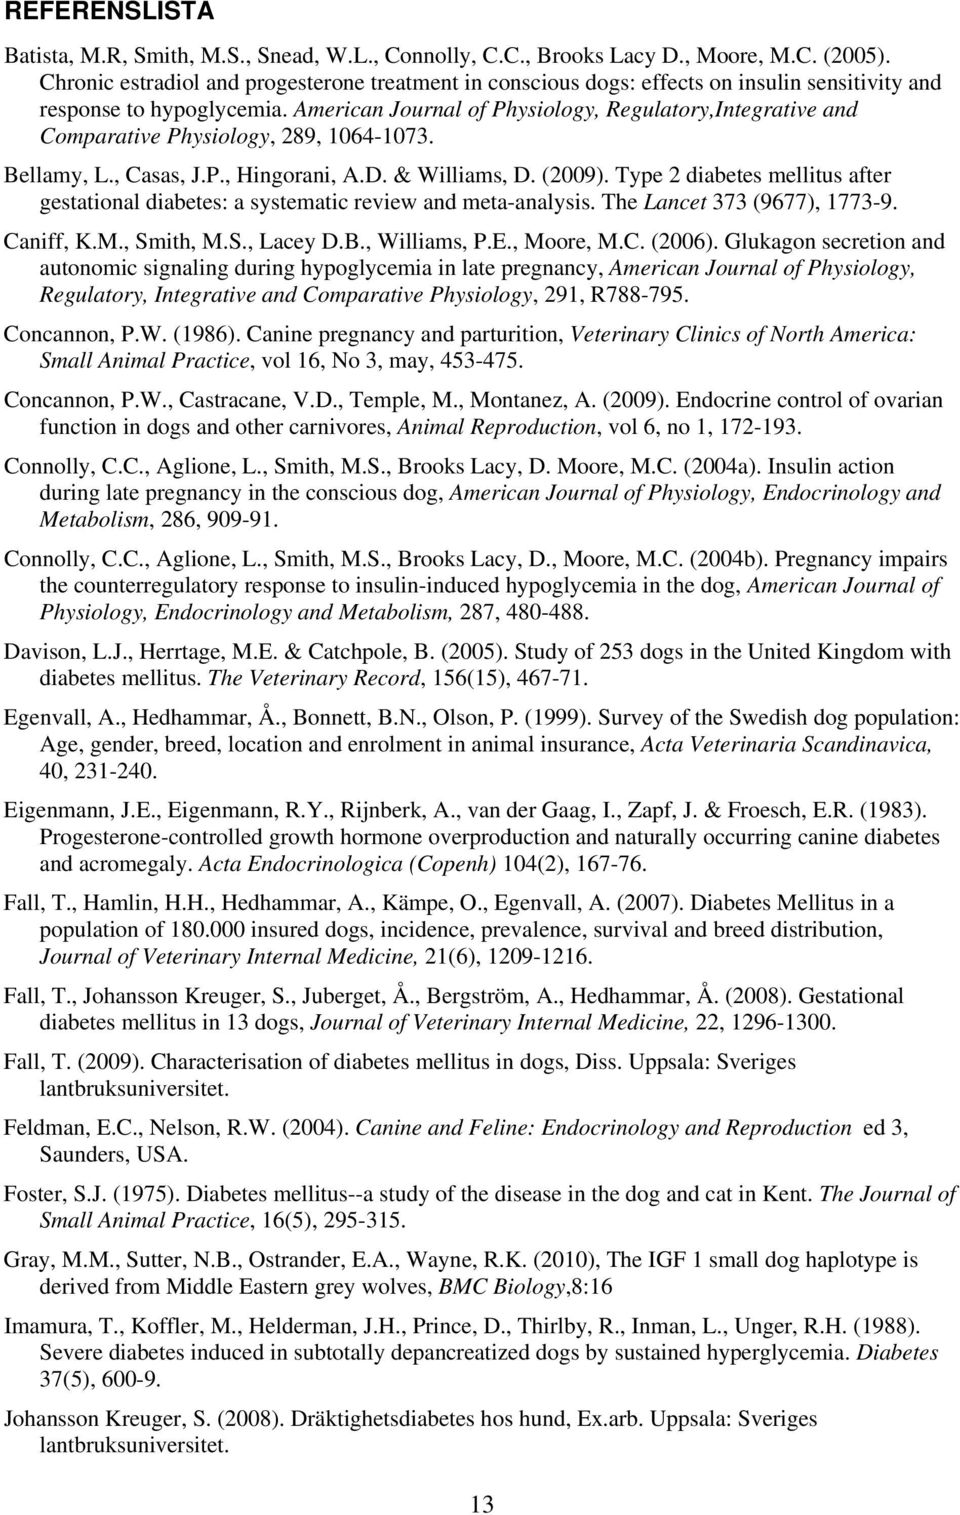 American Journal of Physiology, Regulatory,Integrative and Comparative Physiology, 289, 1064-1073. Bellamy, L., Casas, J.P., Hingorani, A.D. & Williams, D. (2009).